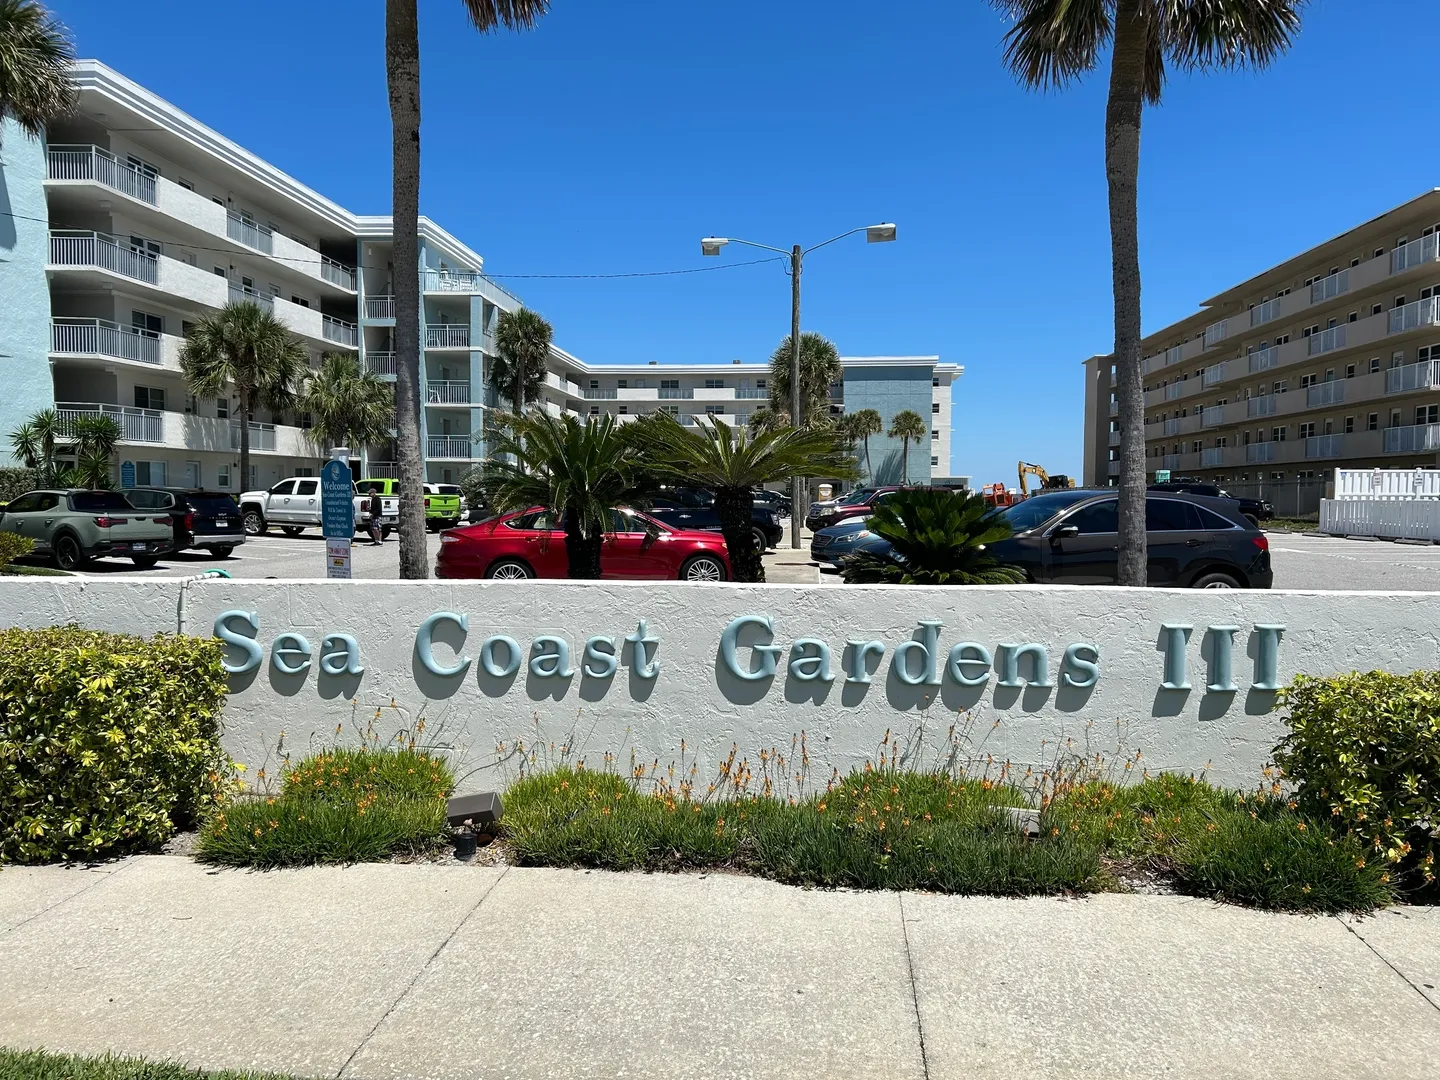 A sign that says sea coast gardens iii.